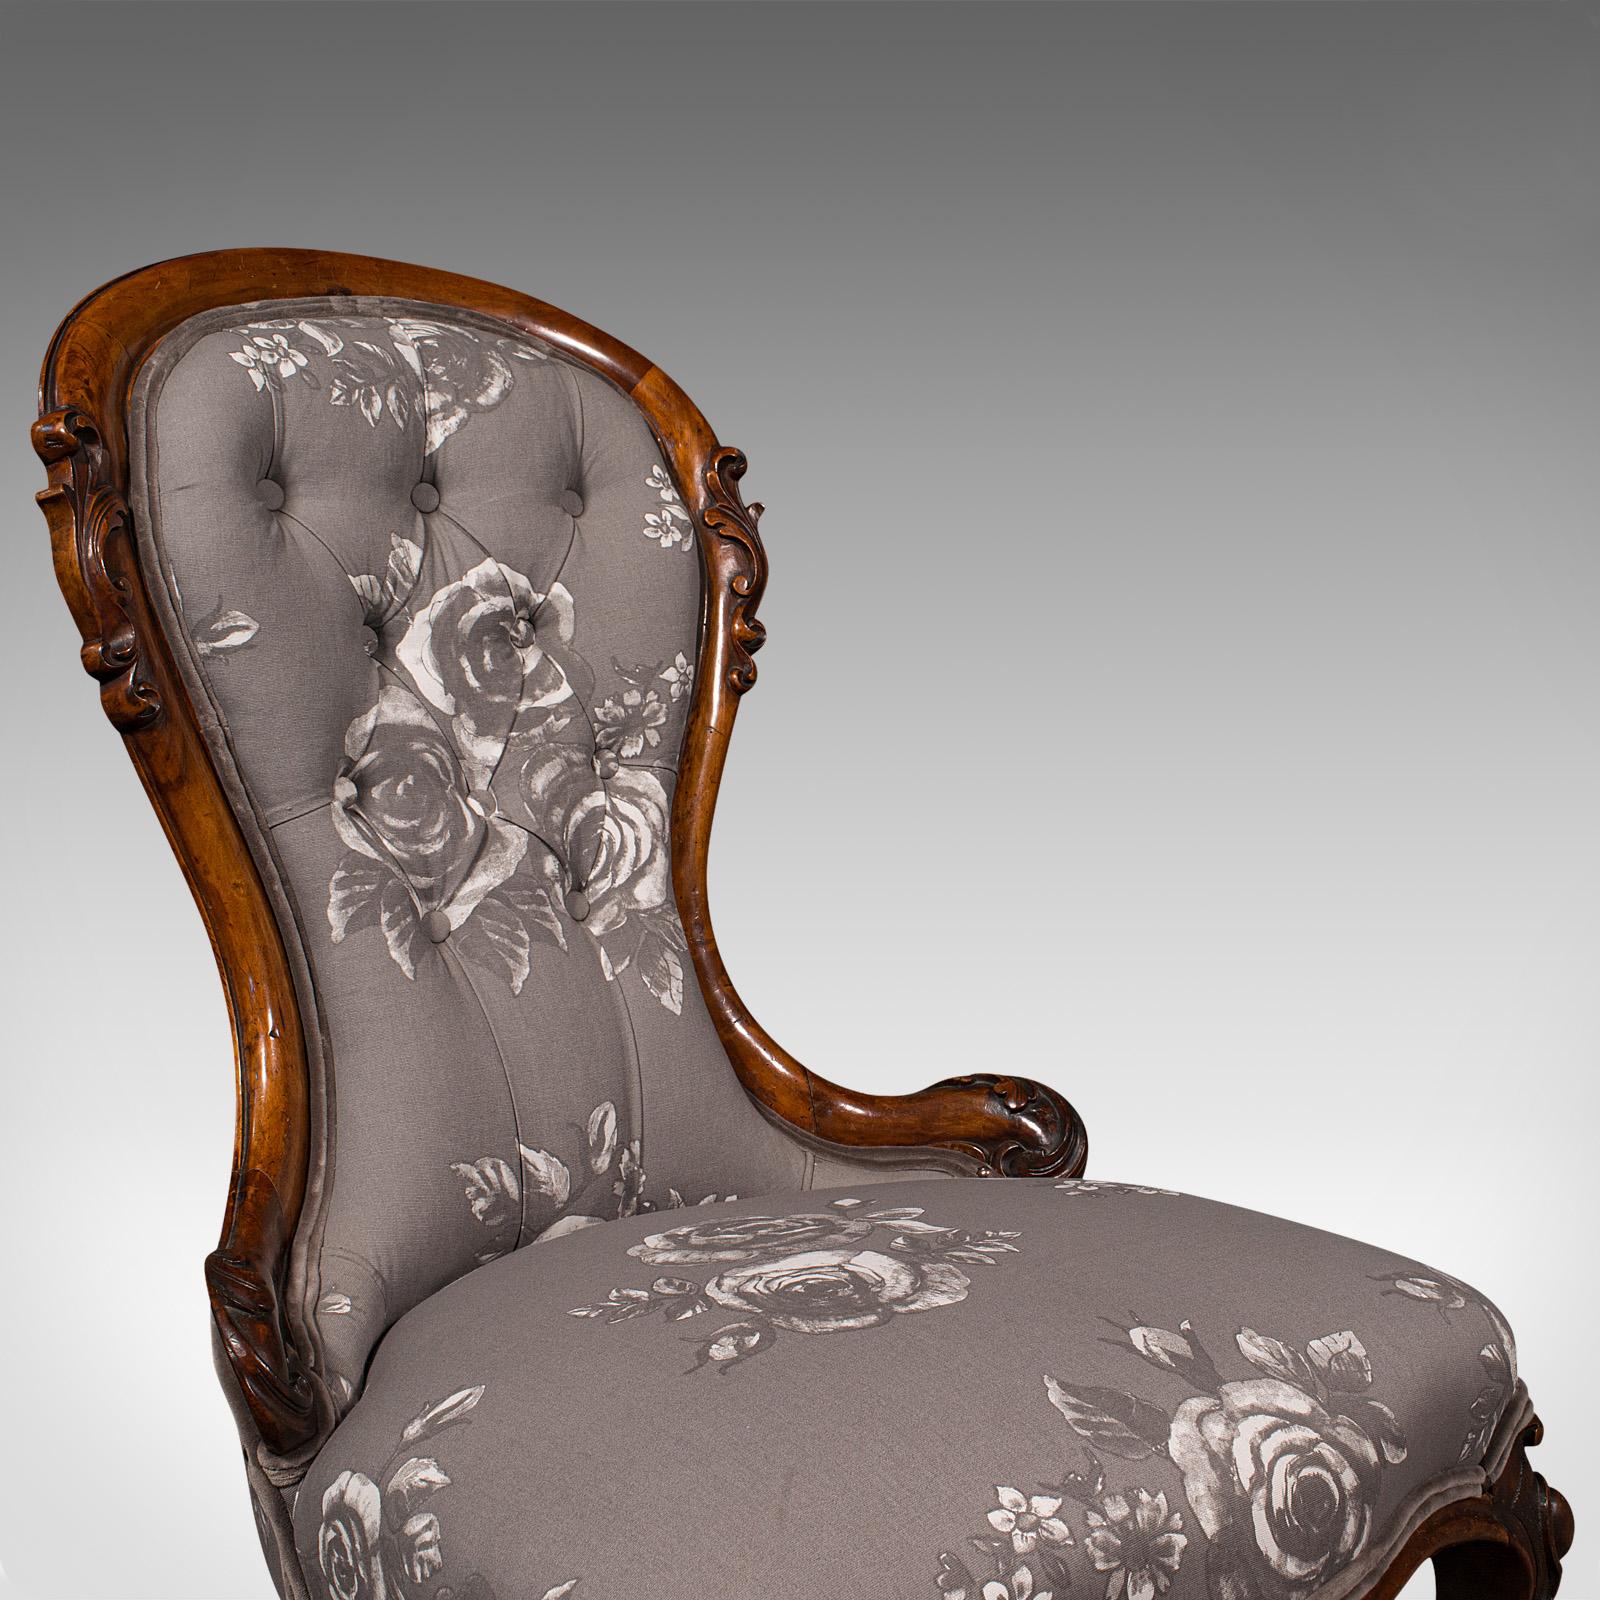 Antique Button Back Salon Chair English Walnut Spoon Seat Victorian circa 1840 For Sale 2